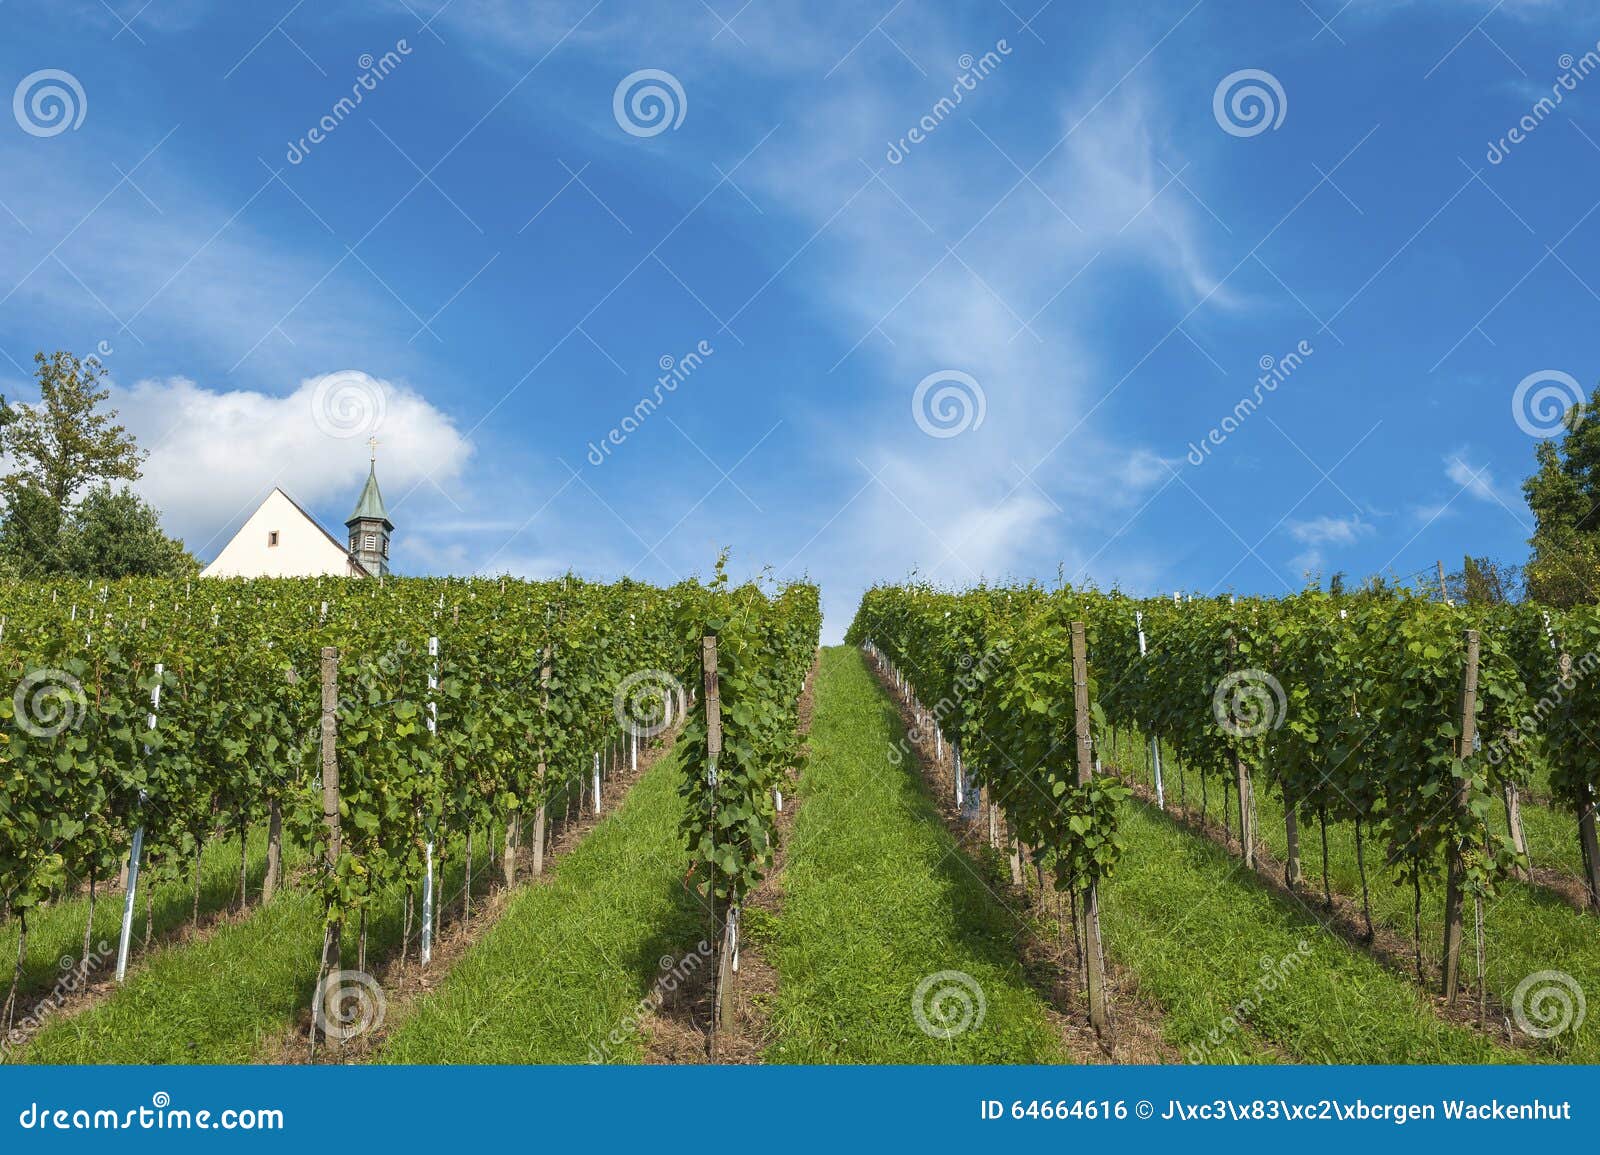 vineyard with jacobus chapel in gengenbach